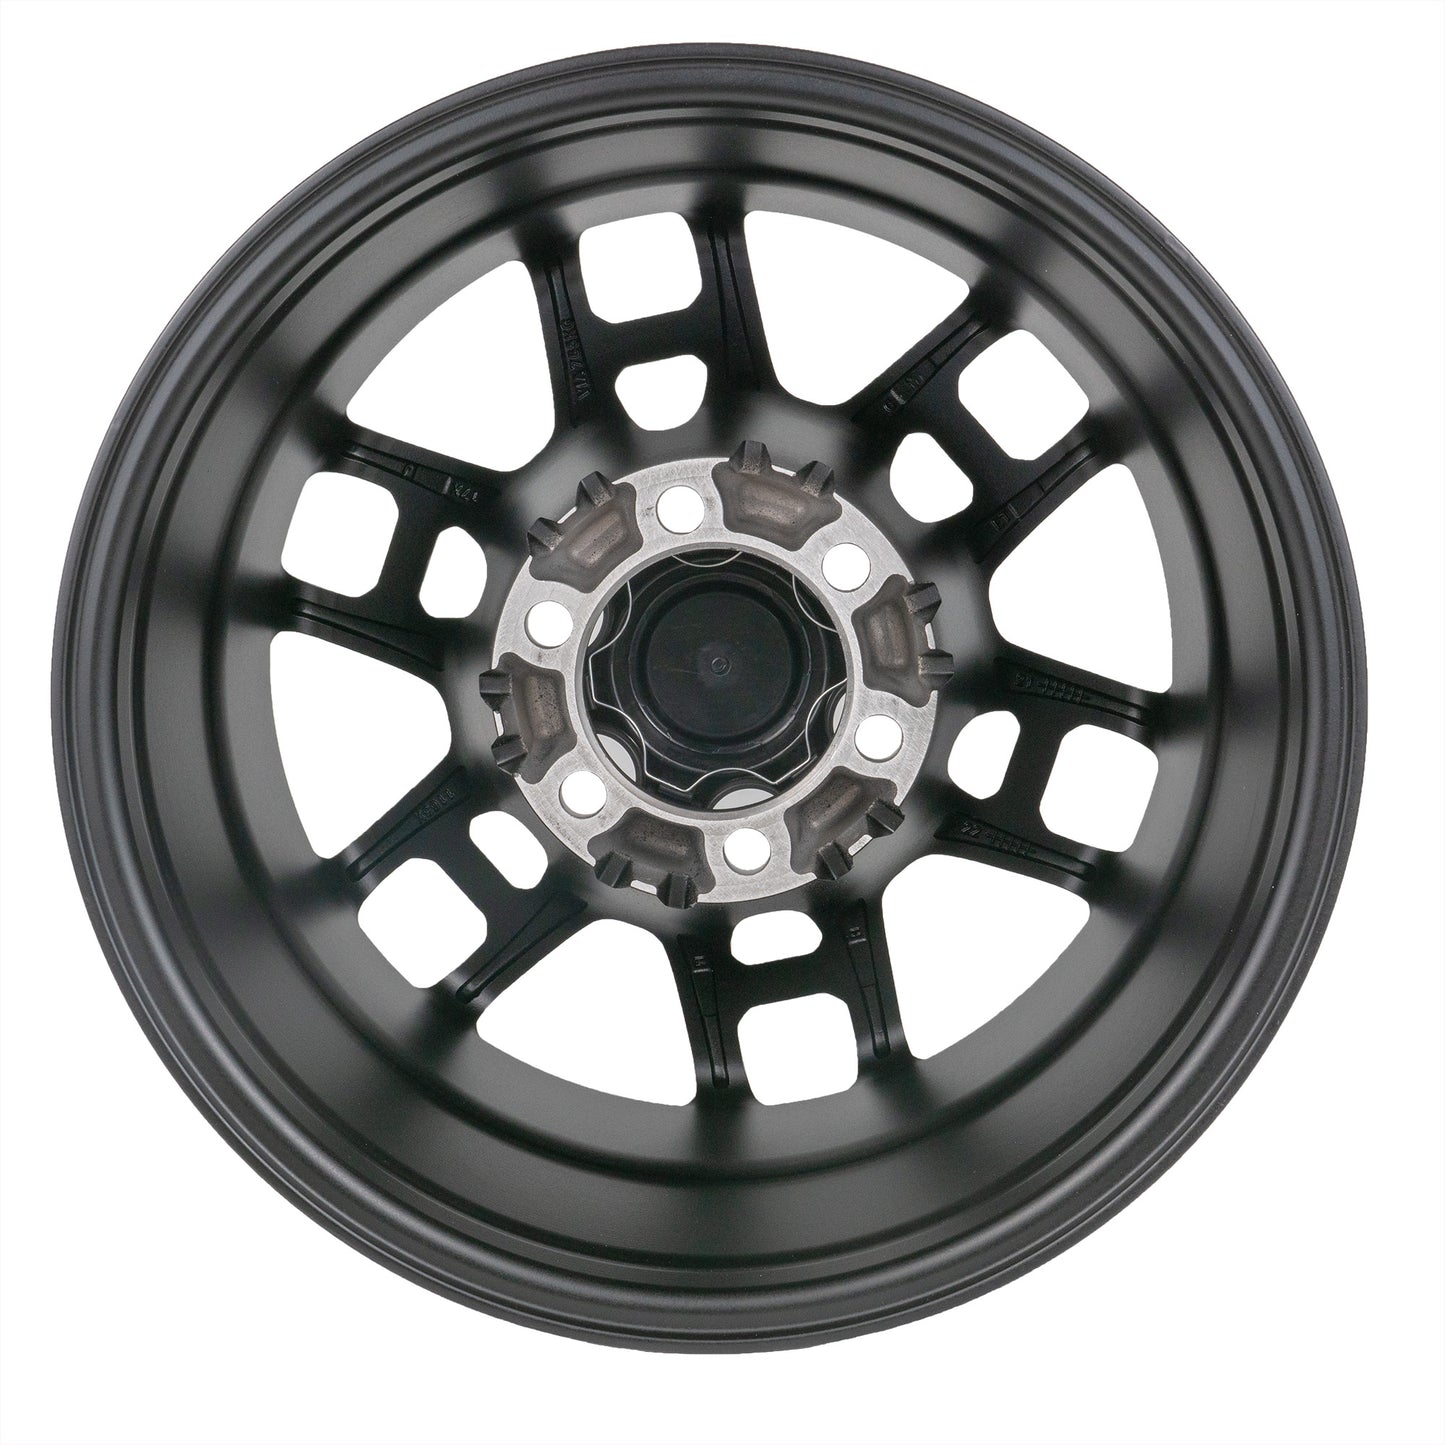 Toyota TRD Wheels 17 x 8/9 Auto Rims PCD 6 x 139.7 ET 15/0 CB 106.1 Set of 4 Matte Black